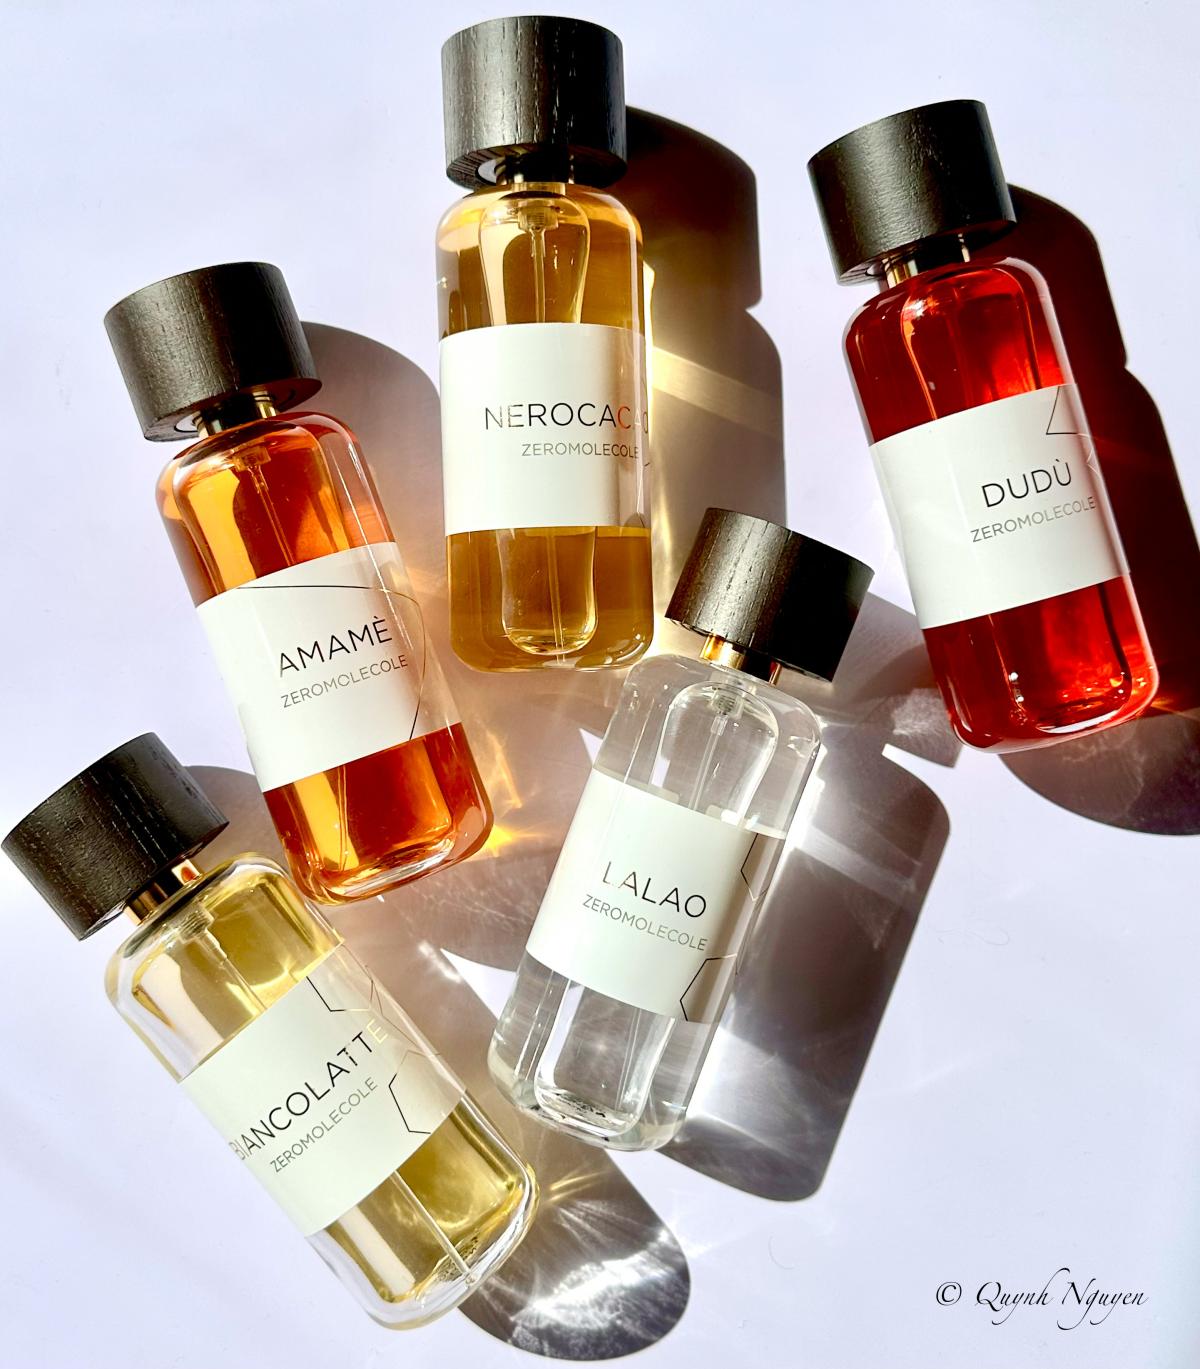 Biancolatte Zeromolecole perfume - a fragrance for women and men 2011